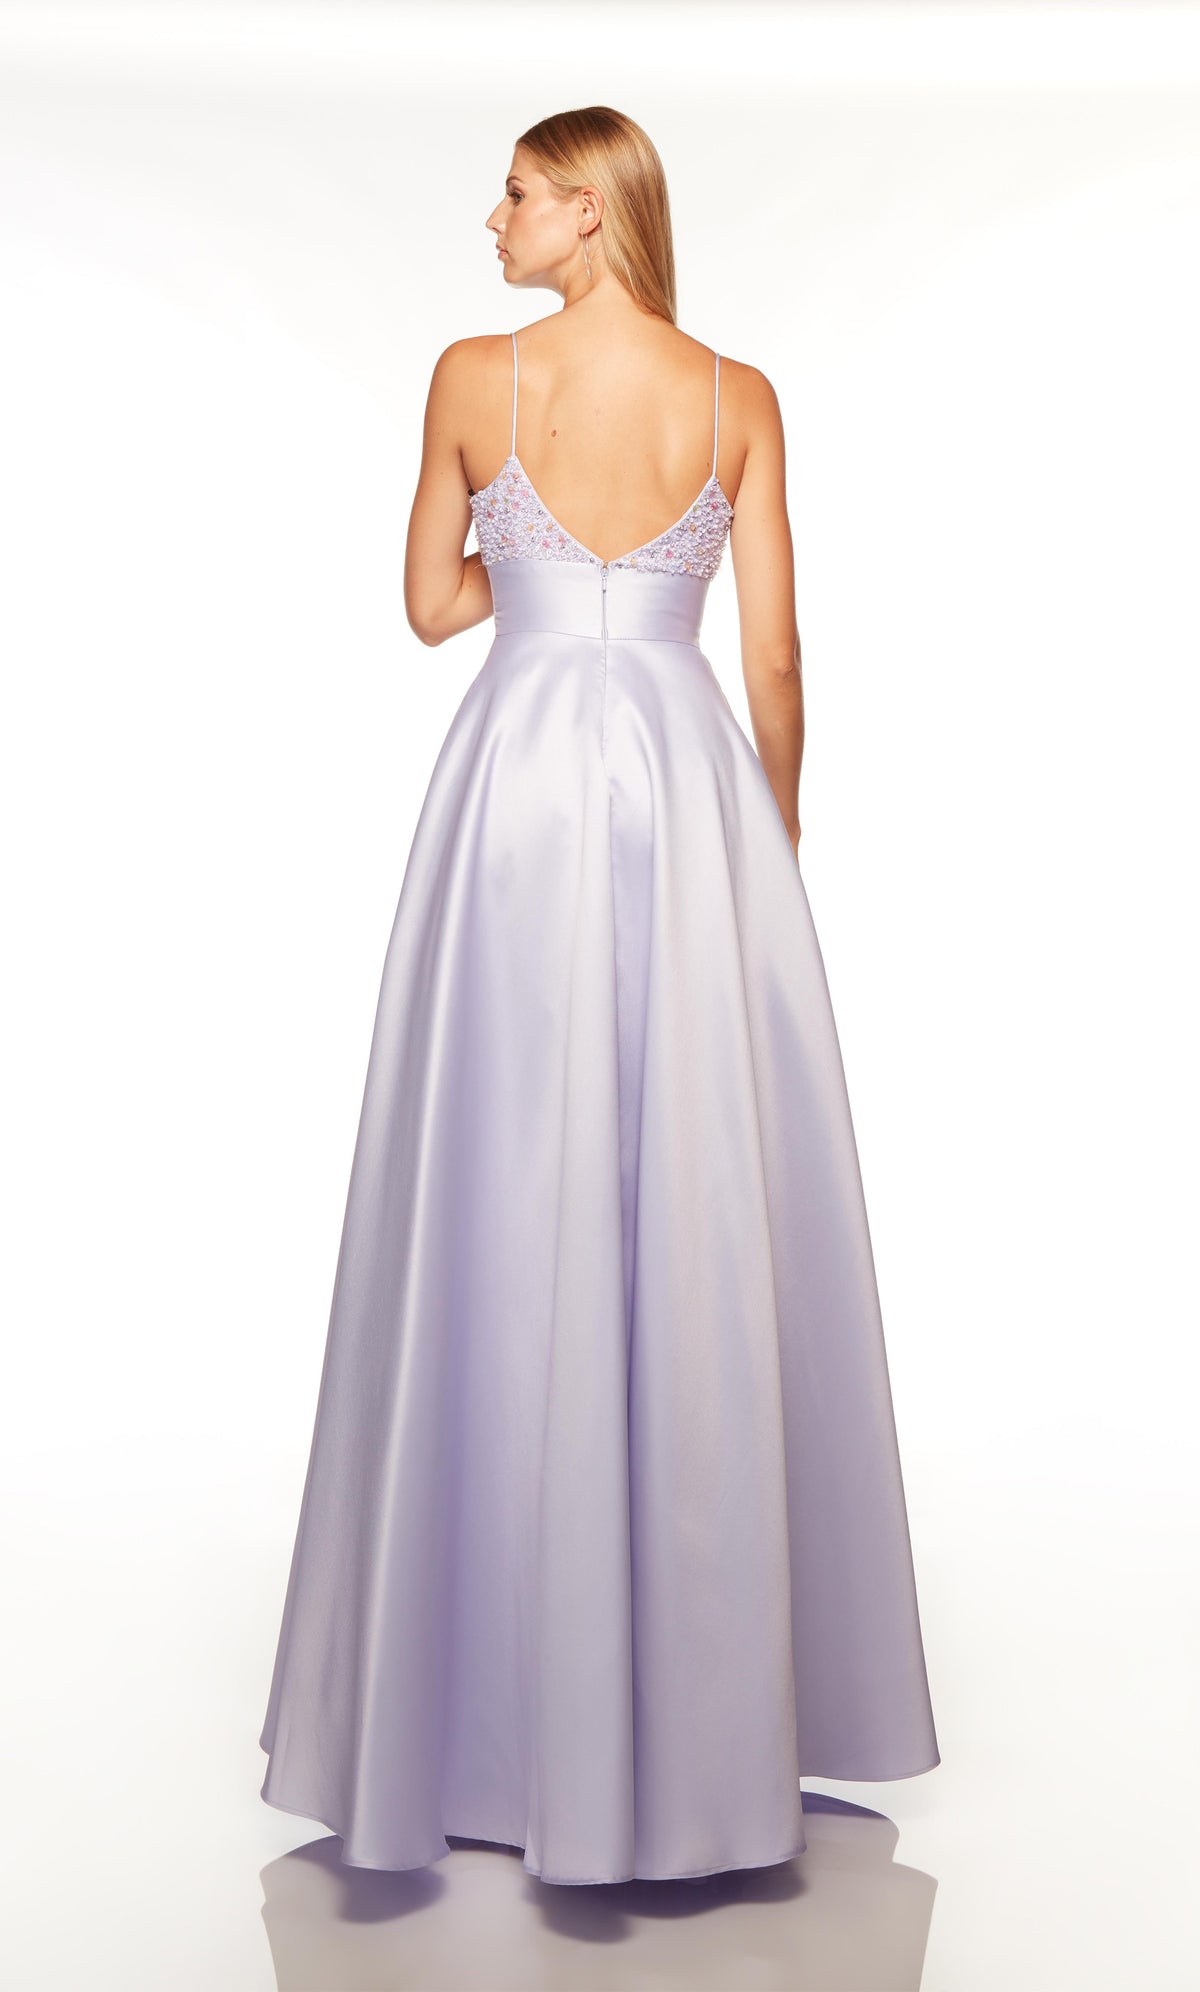 Lilac dress with a V shaped back and pockets.